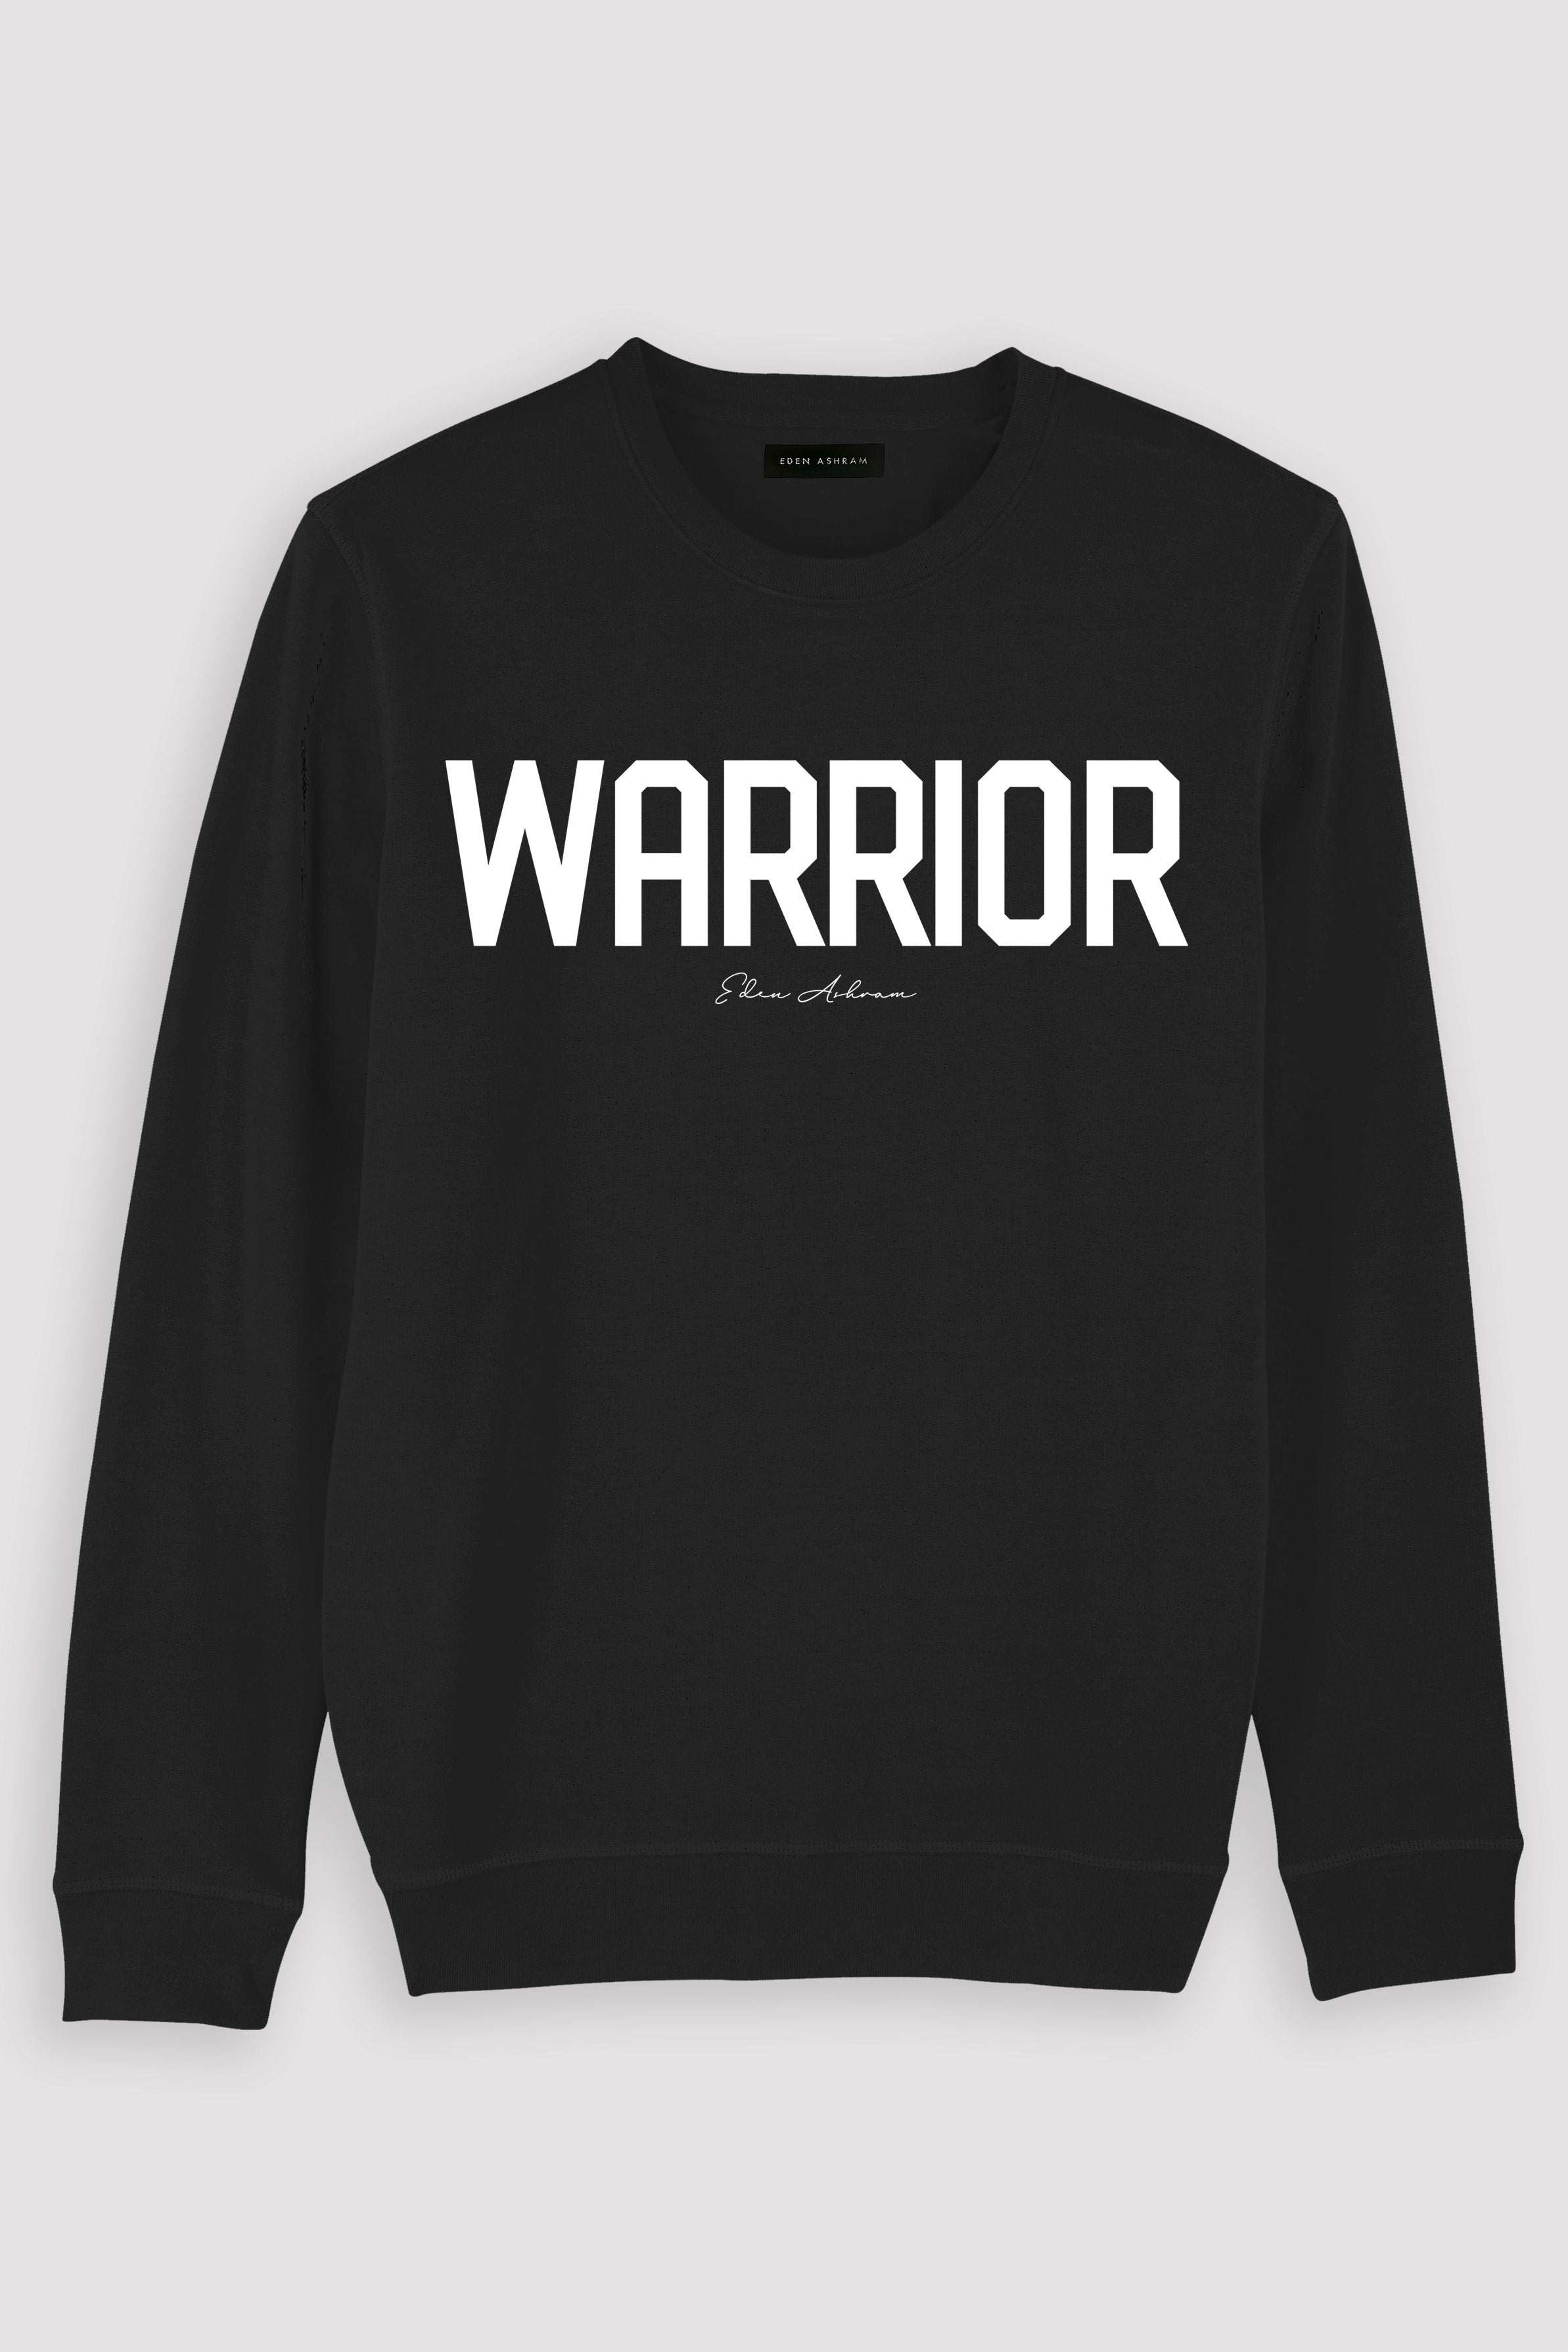 EDEN ASHRAM Warrior Premium Crew Neck Sweatshirt Black